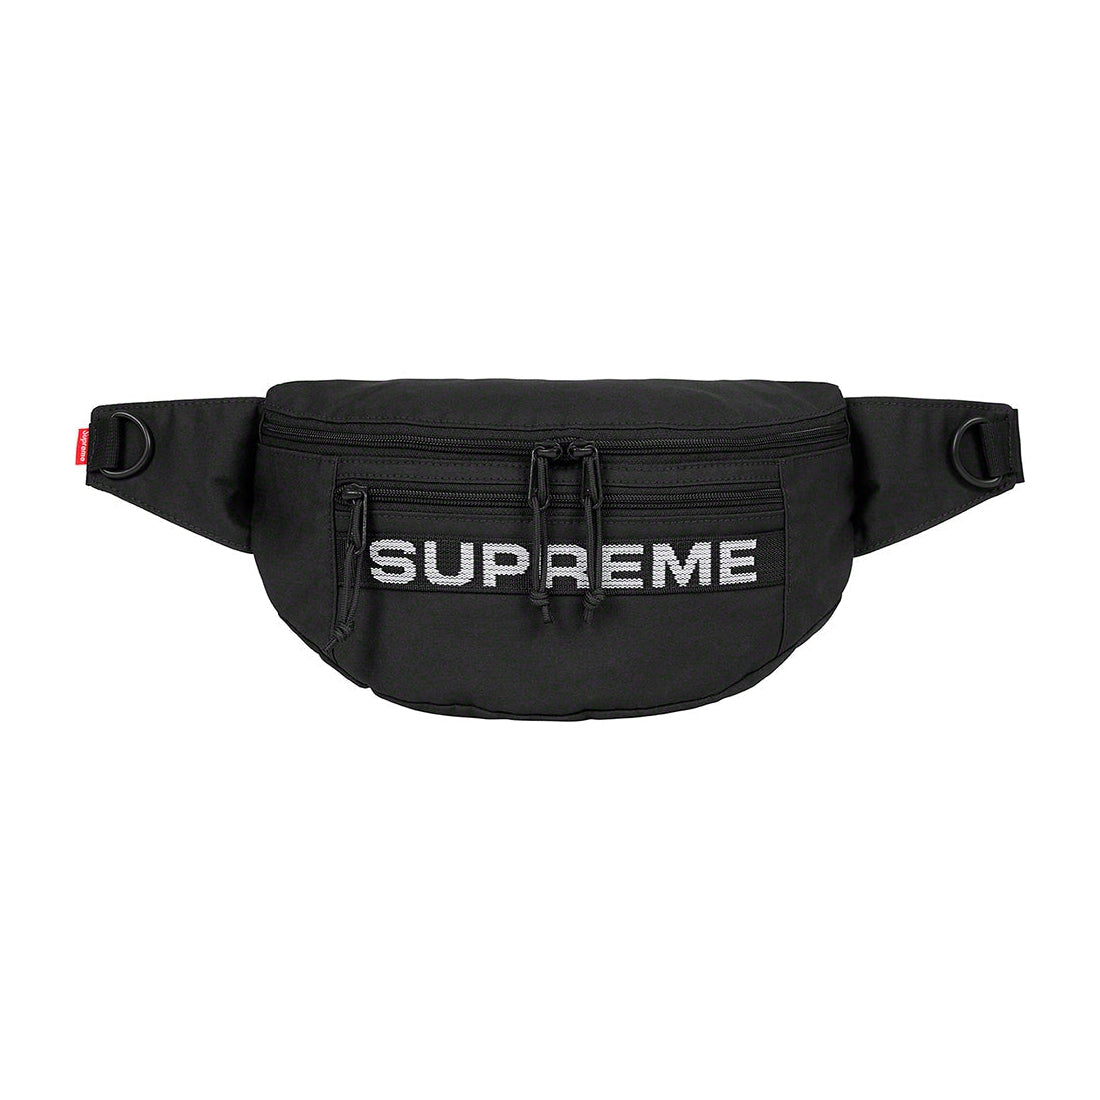 Supreme Field Waist Bag Black from Supreme